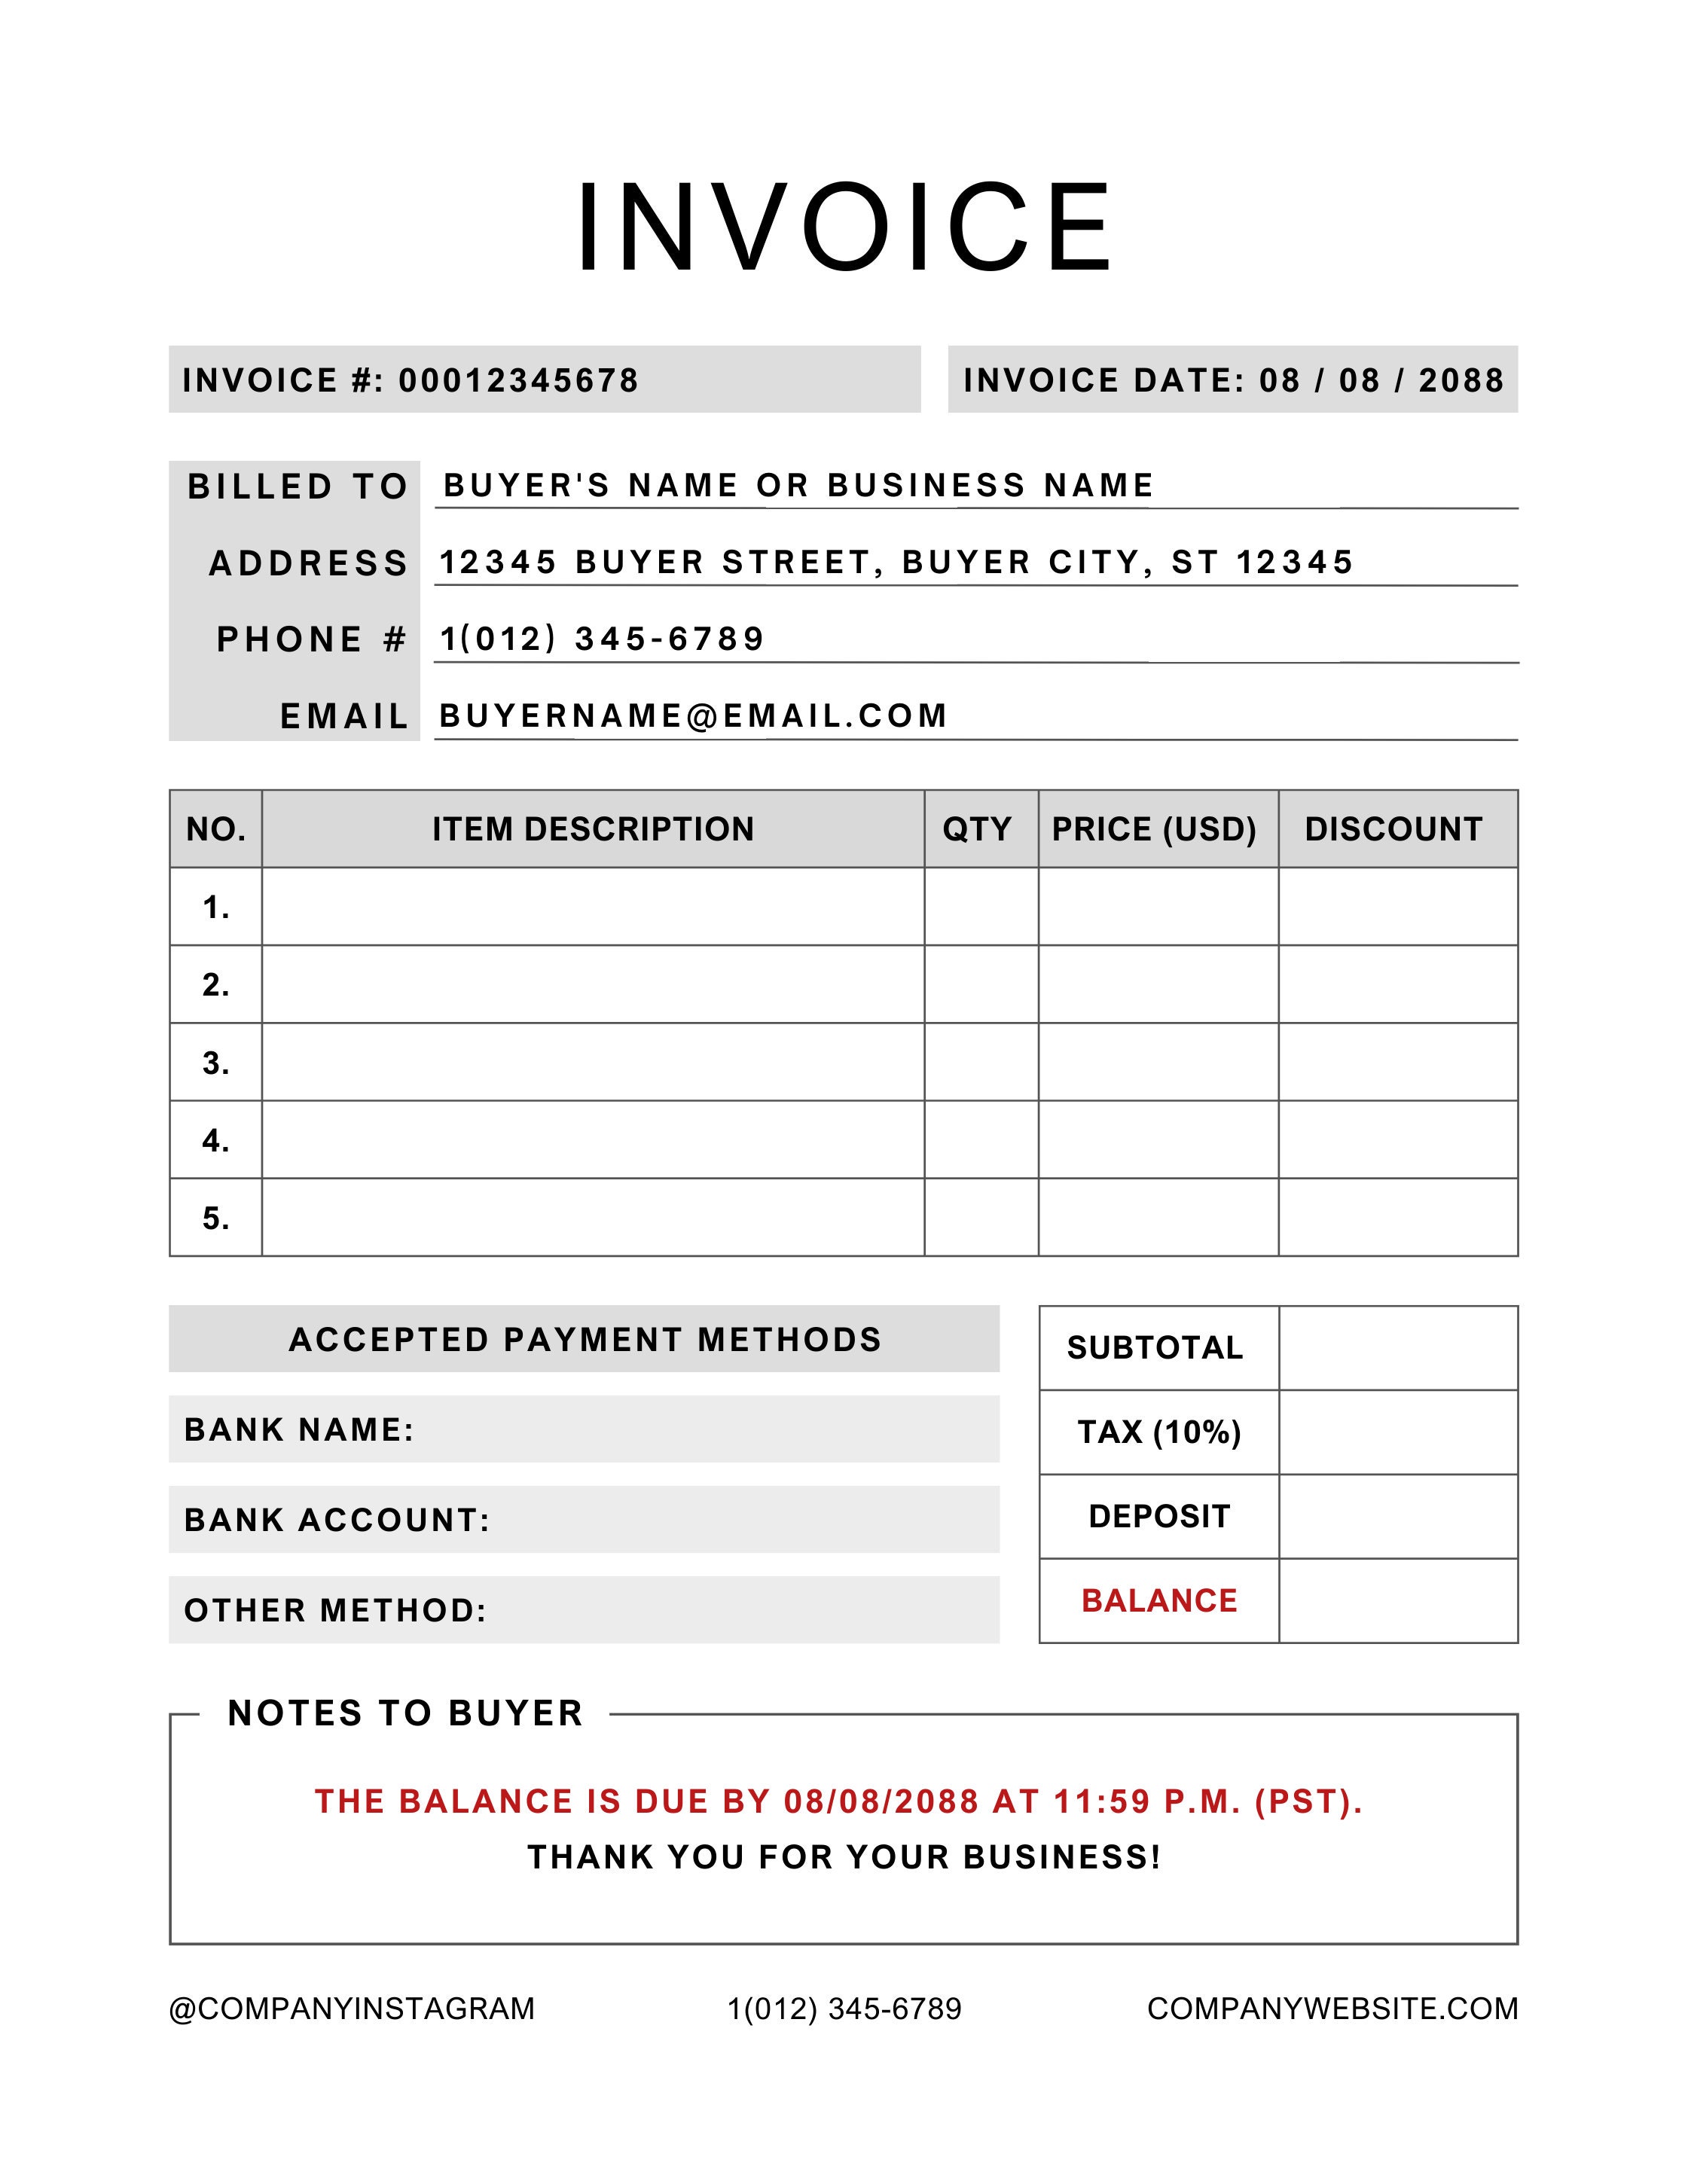 Invoice Template, Business Invoice, Printable Invoice, Editable Invoice ...